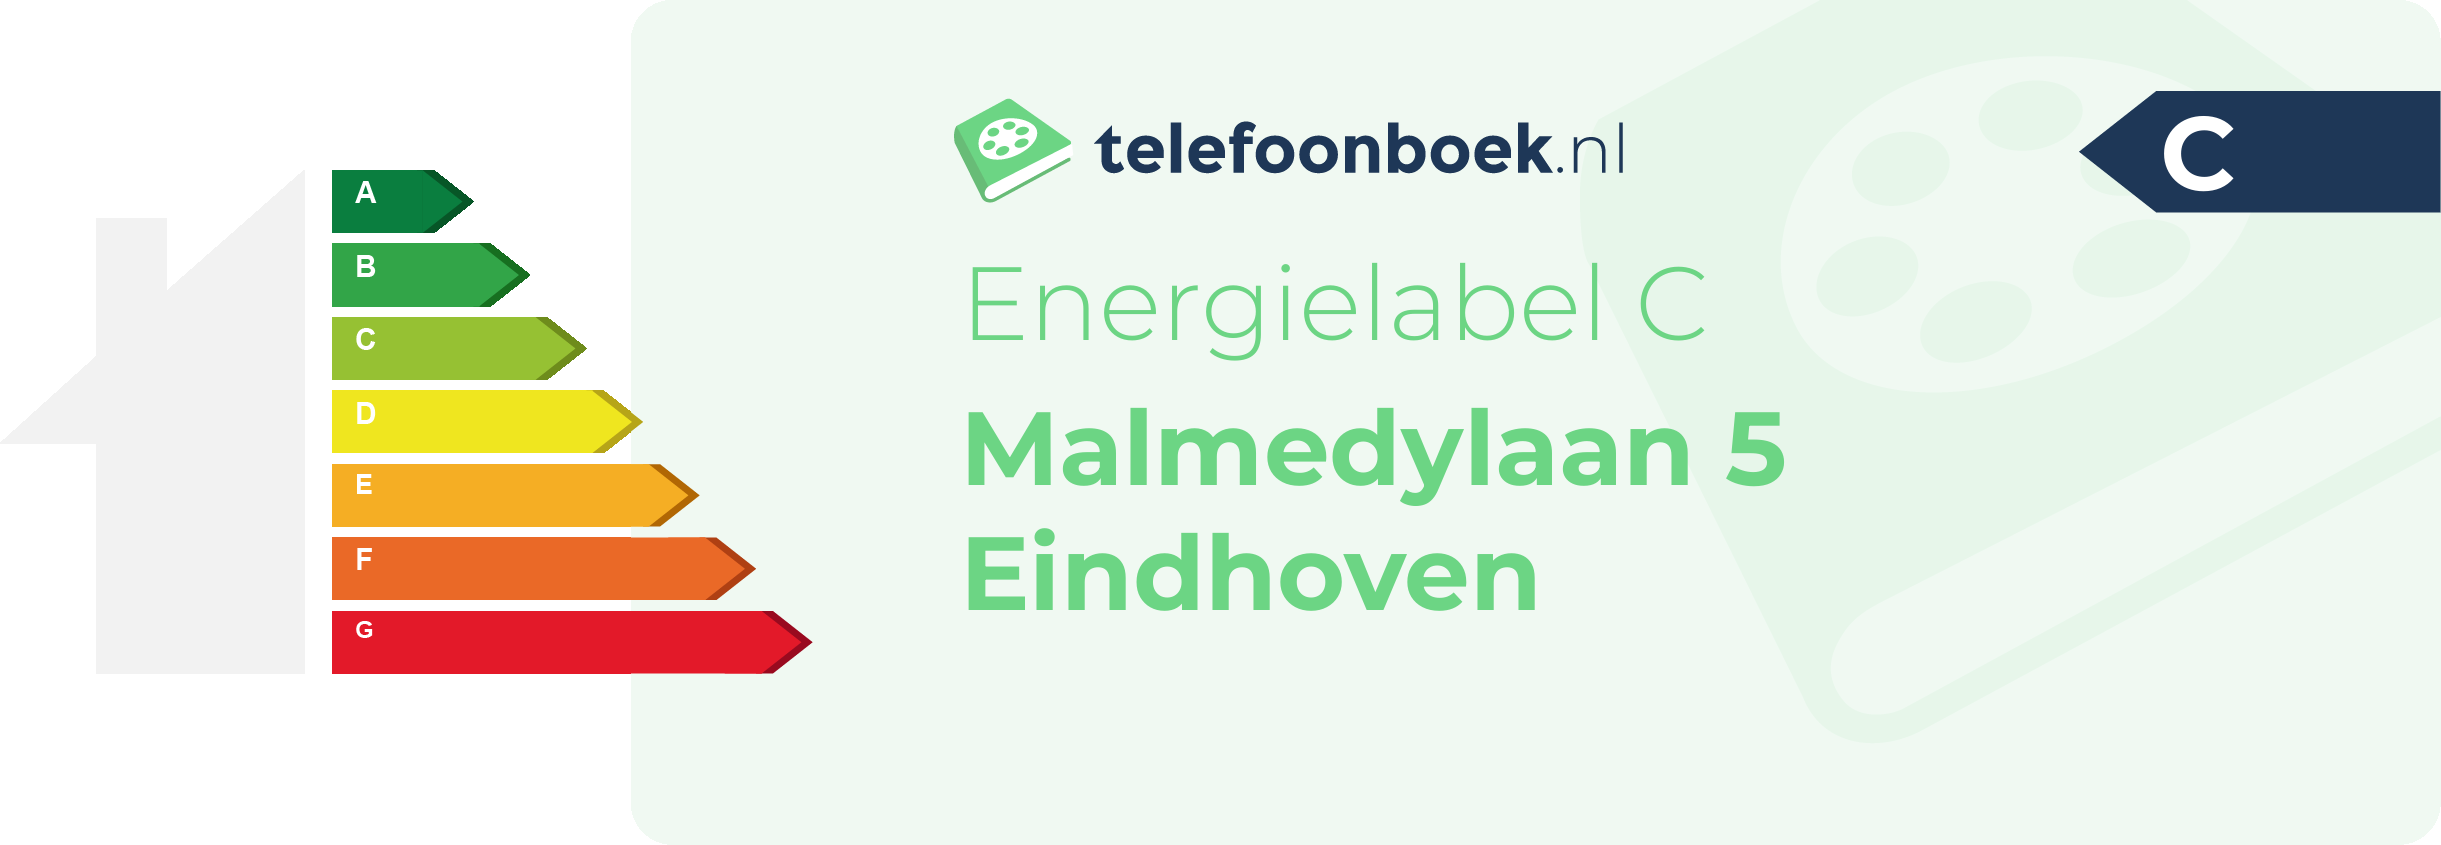 Energielabel Malmedylaan 5 Eindhoven